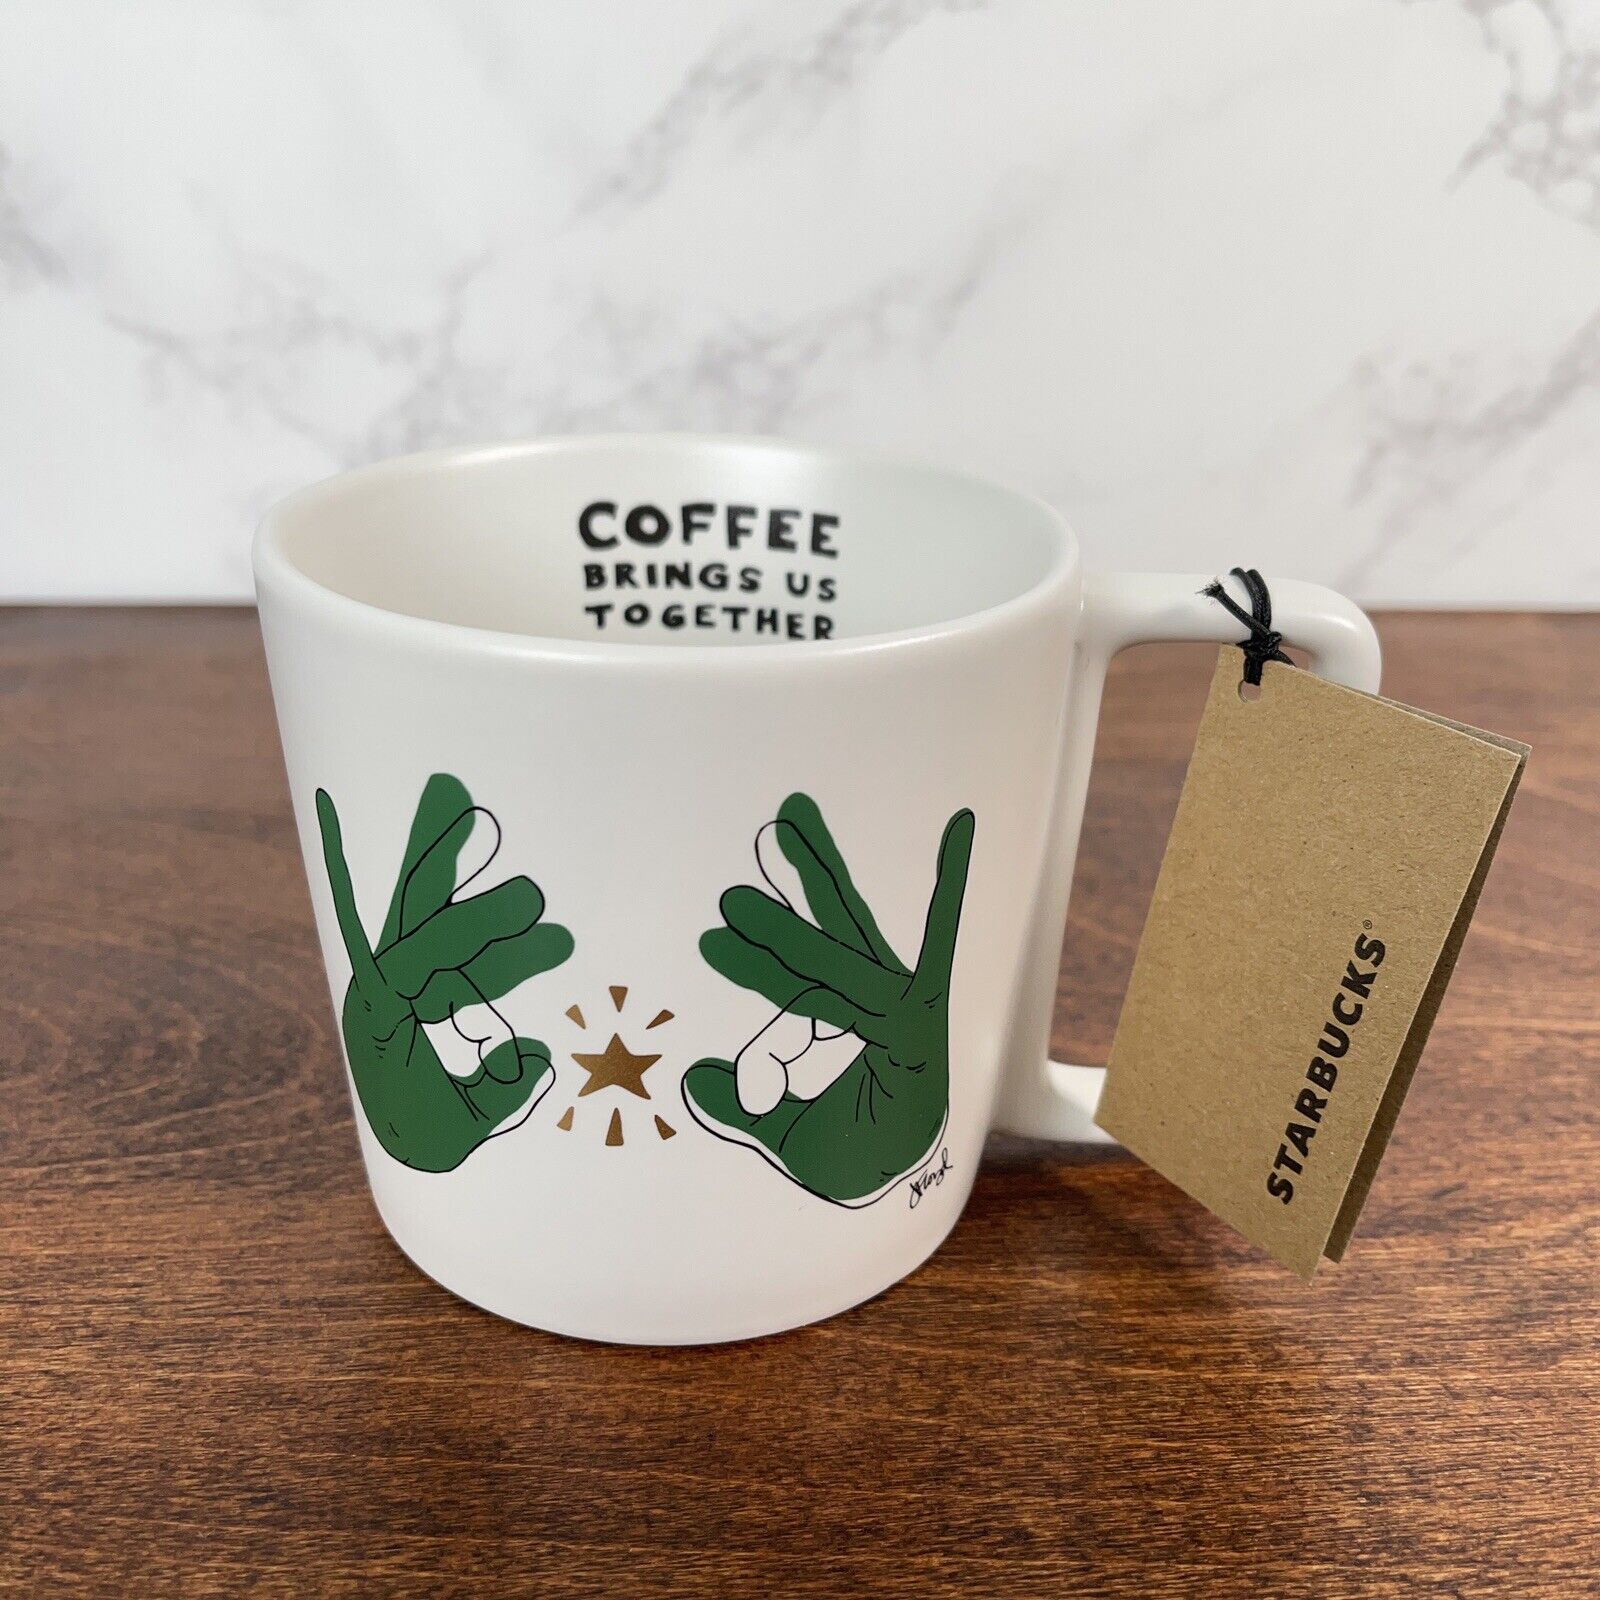 NEW Starbucks ASL Deaf Sign Language Coffee Mug Limited Edition Cup Mug 20019